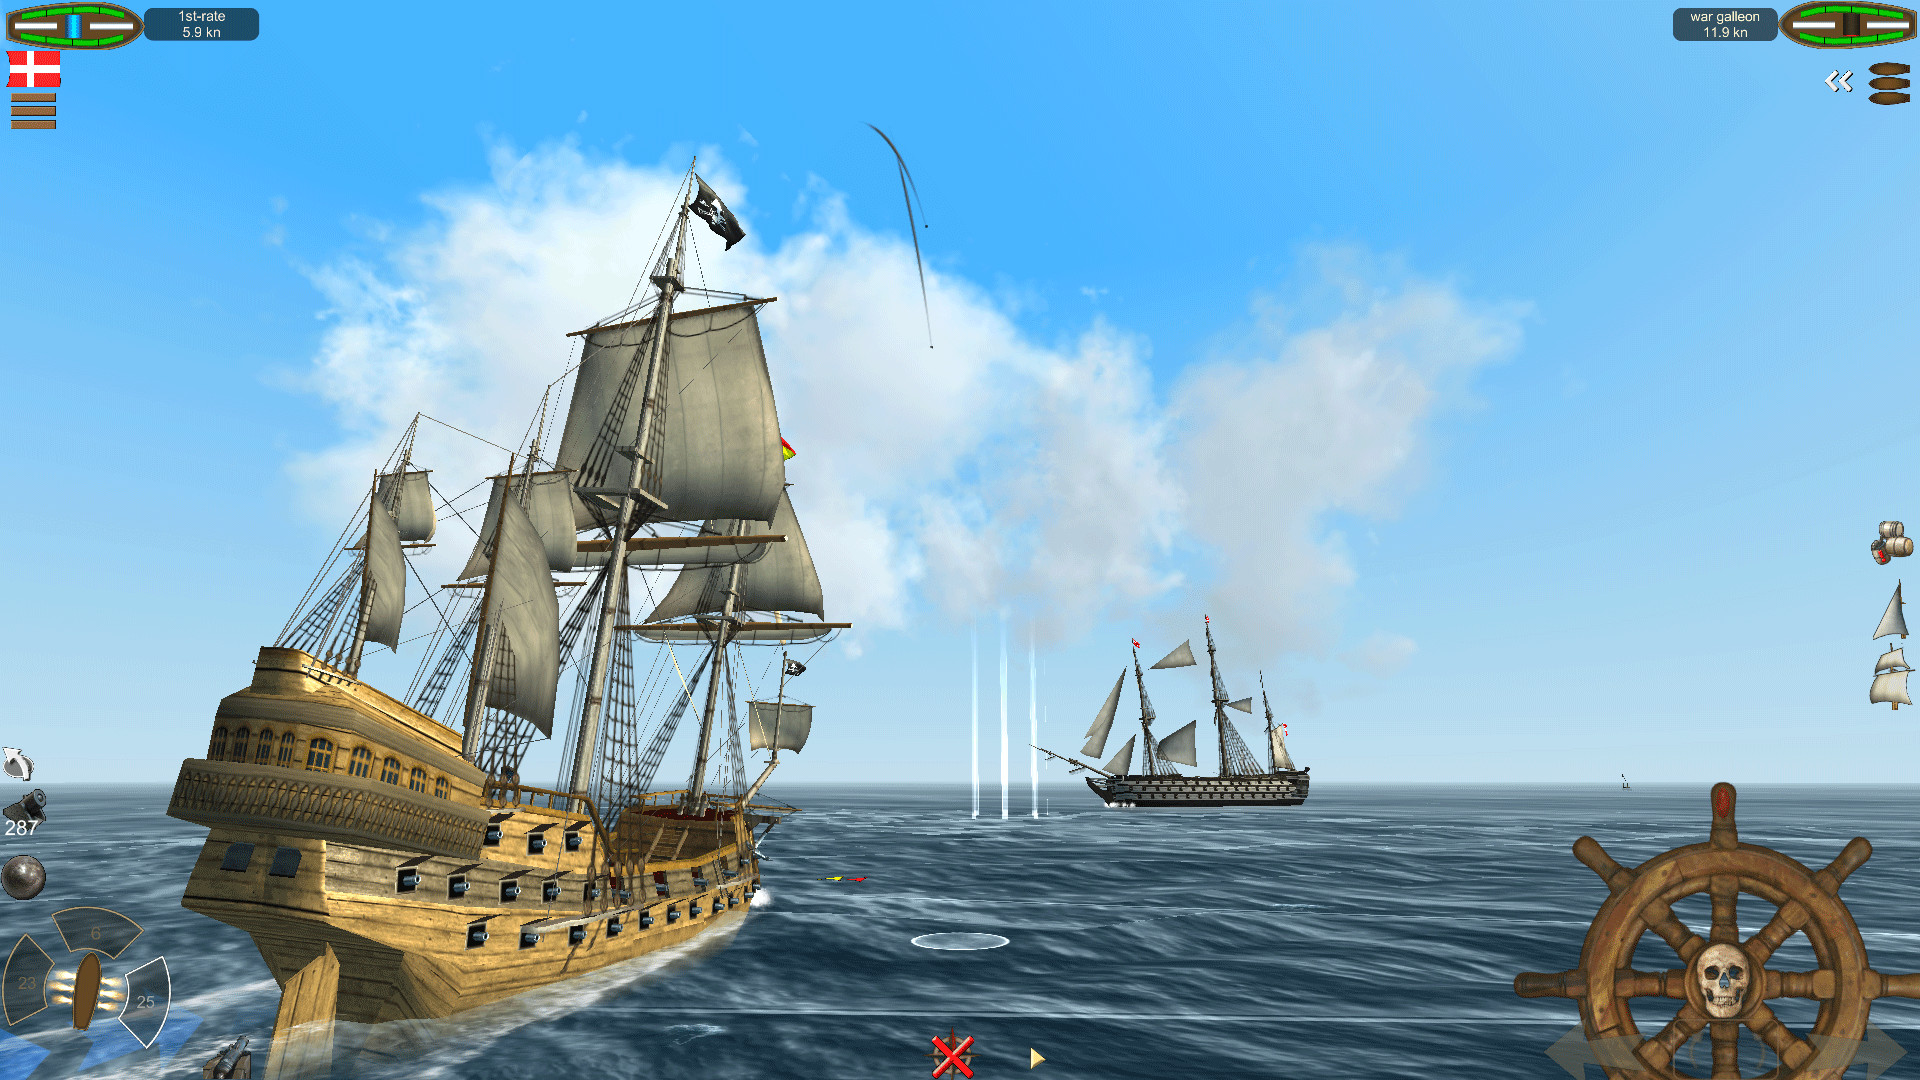 Скриншоты The Pirate: Caribbean Hunt.